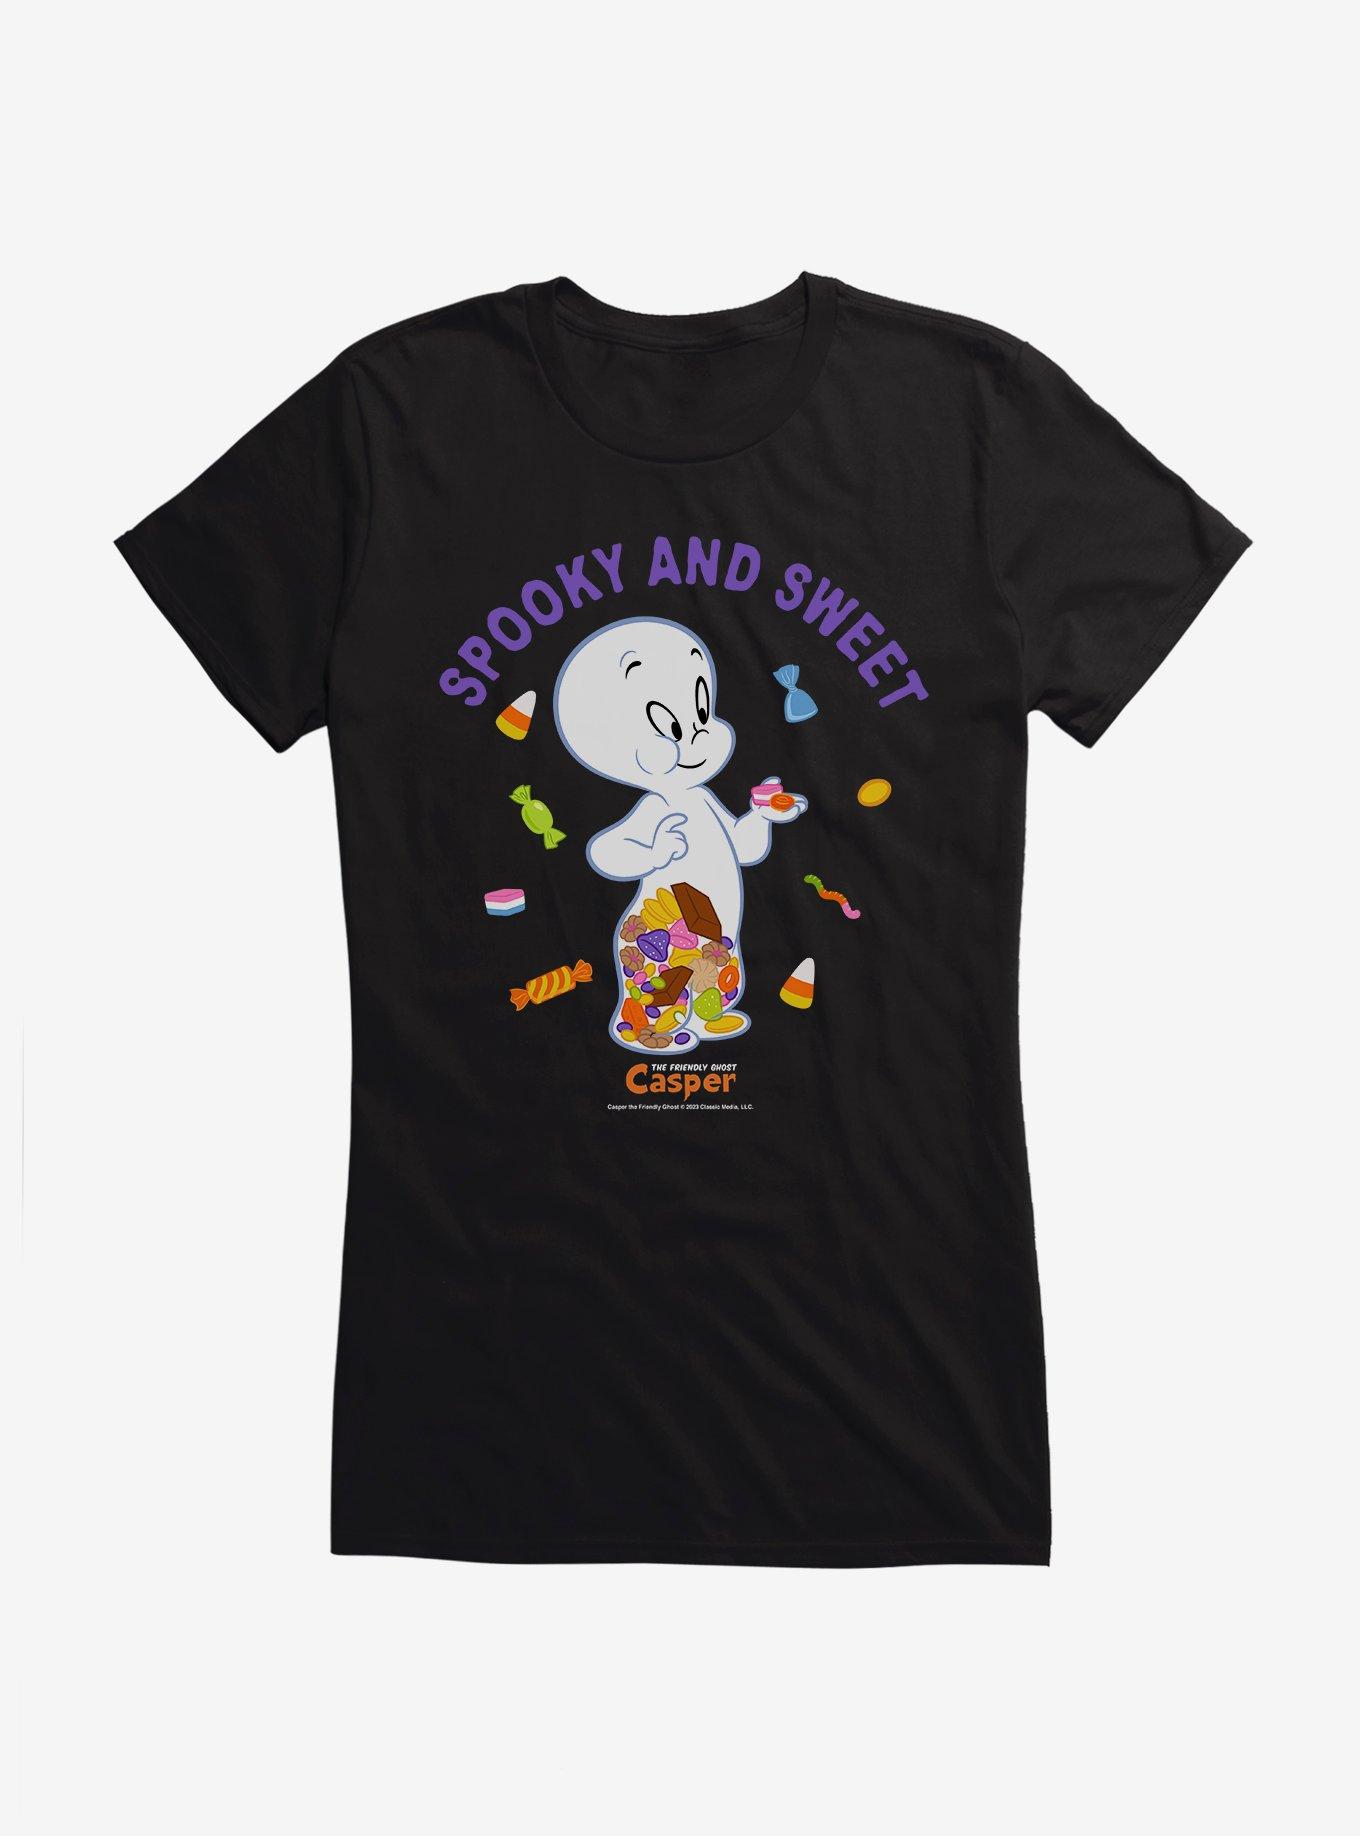 Casper Spooky And Sweet Girls T-Shirt, , hi-res